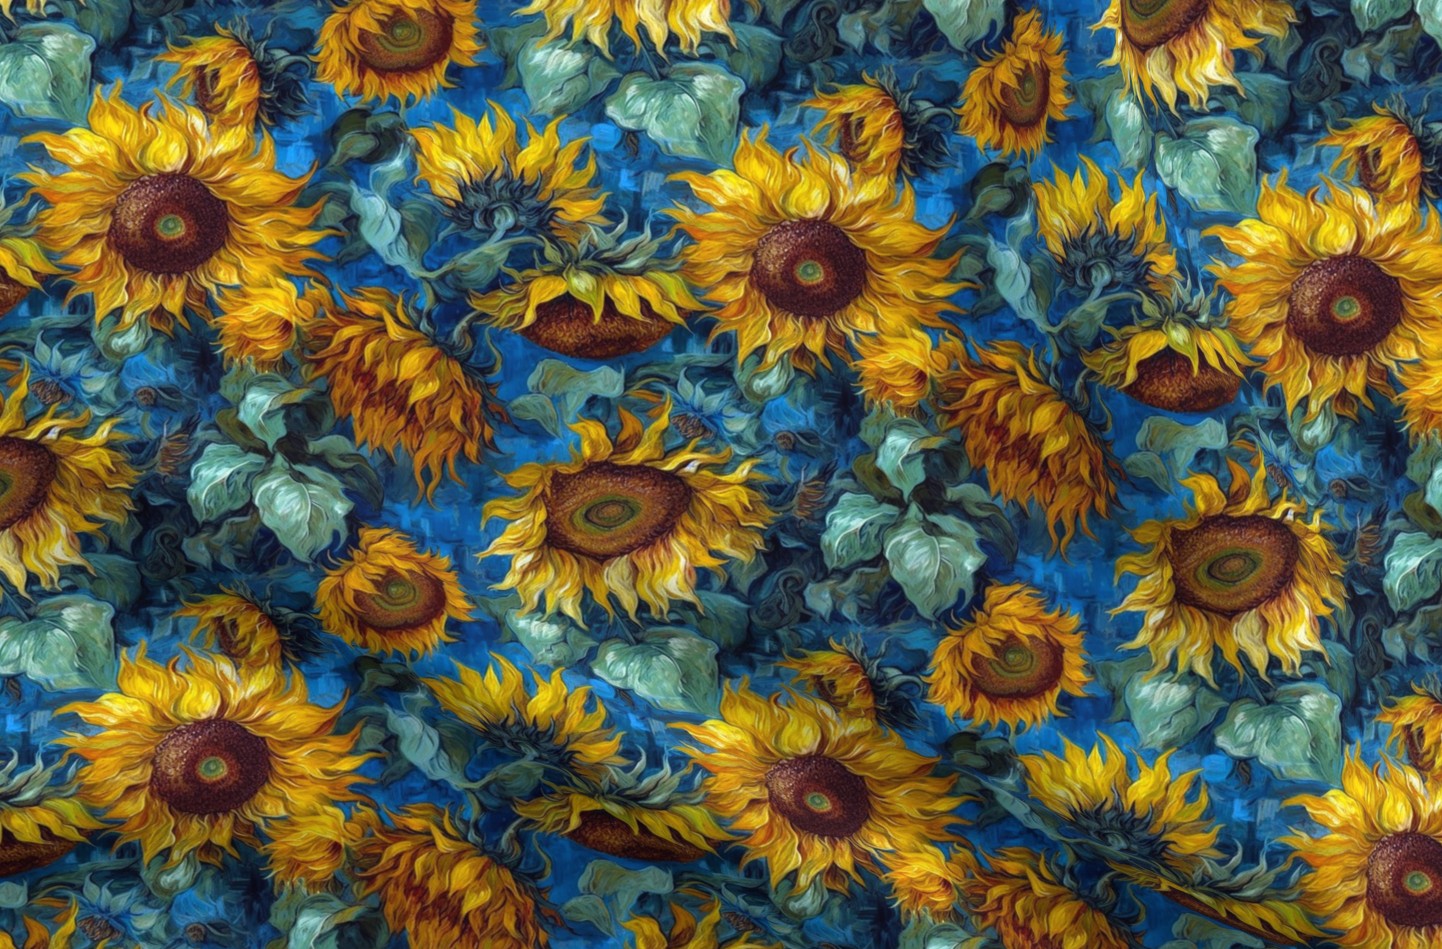 Sunflowers in Oils Printed Fabric by Studio Ten Design